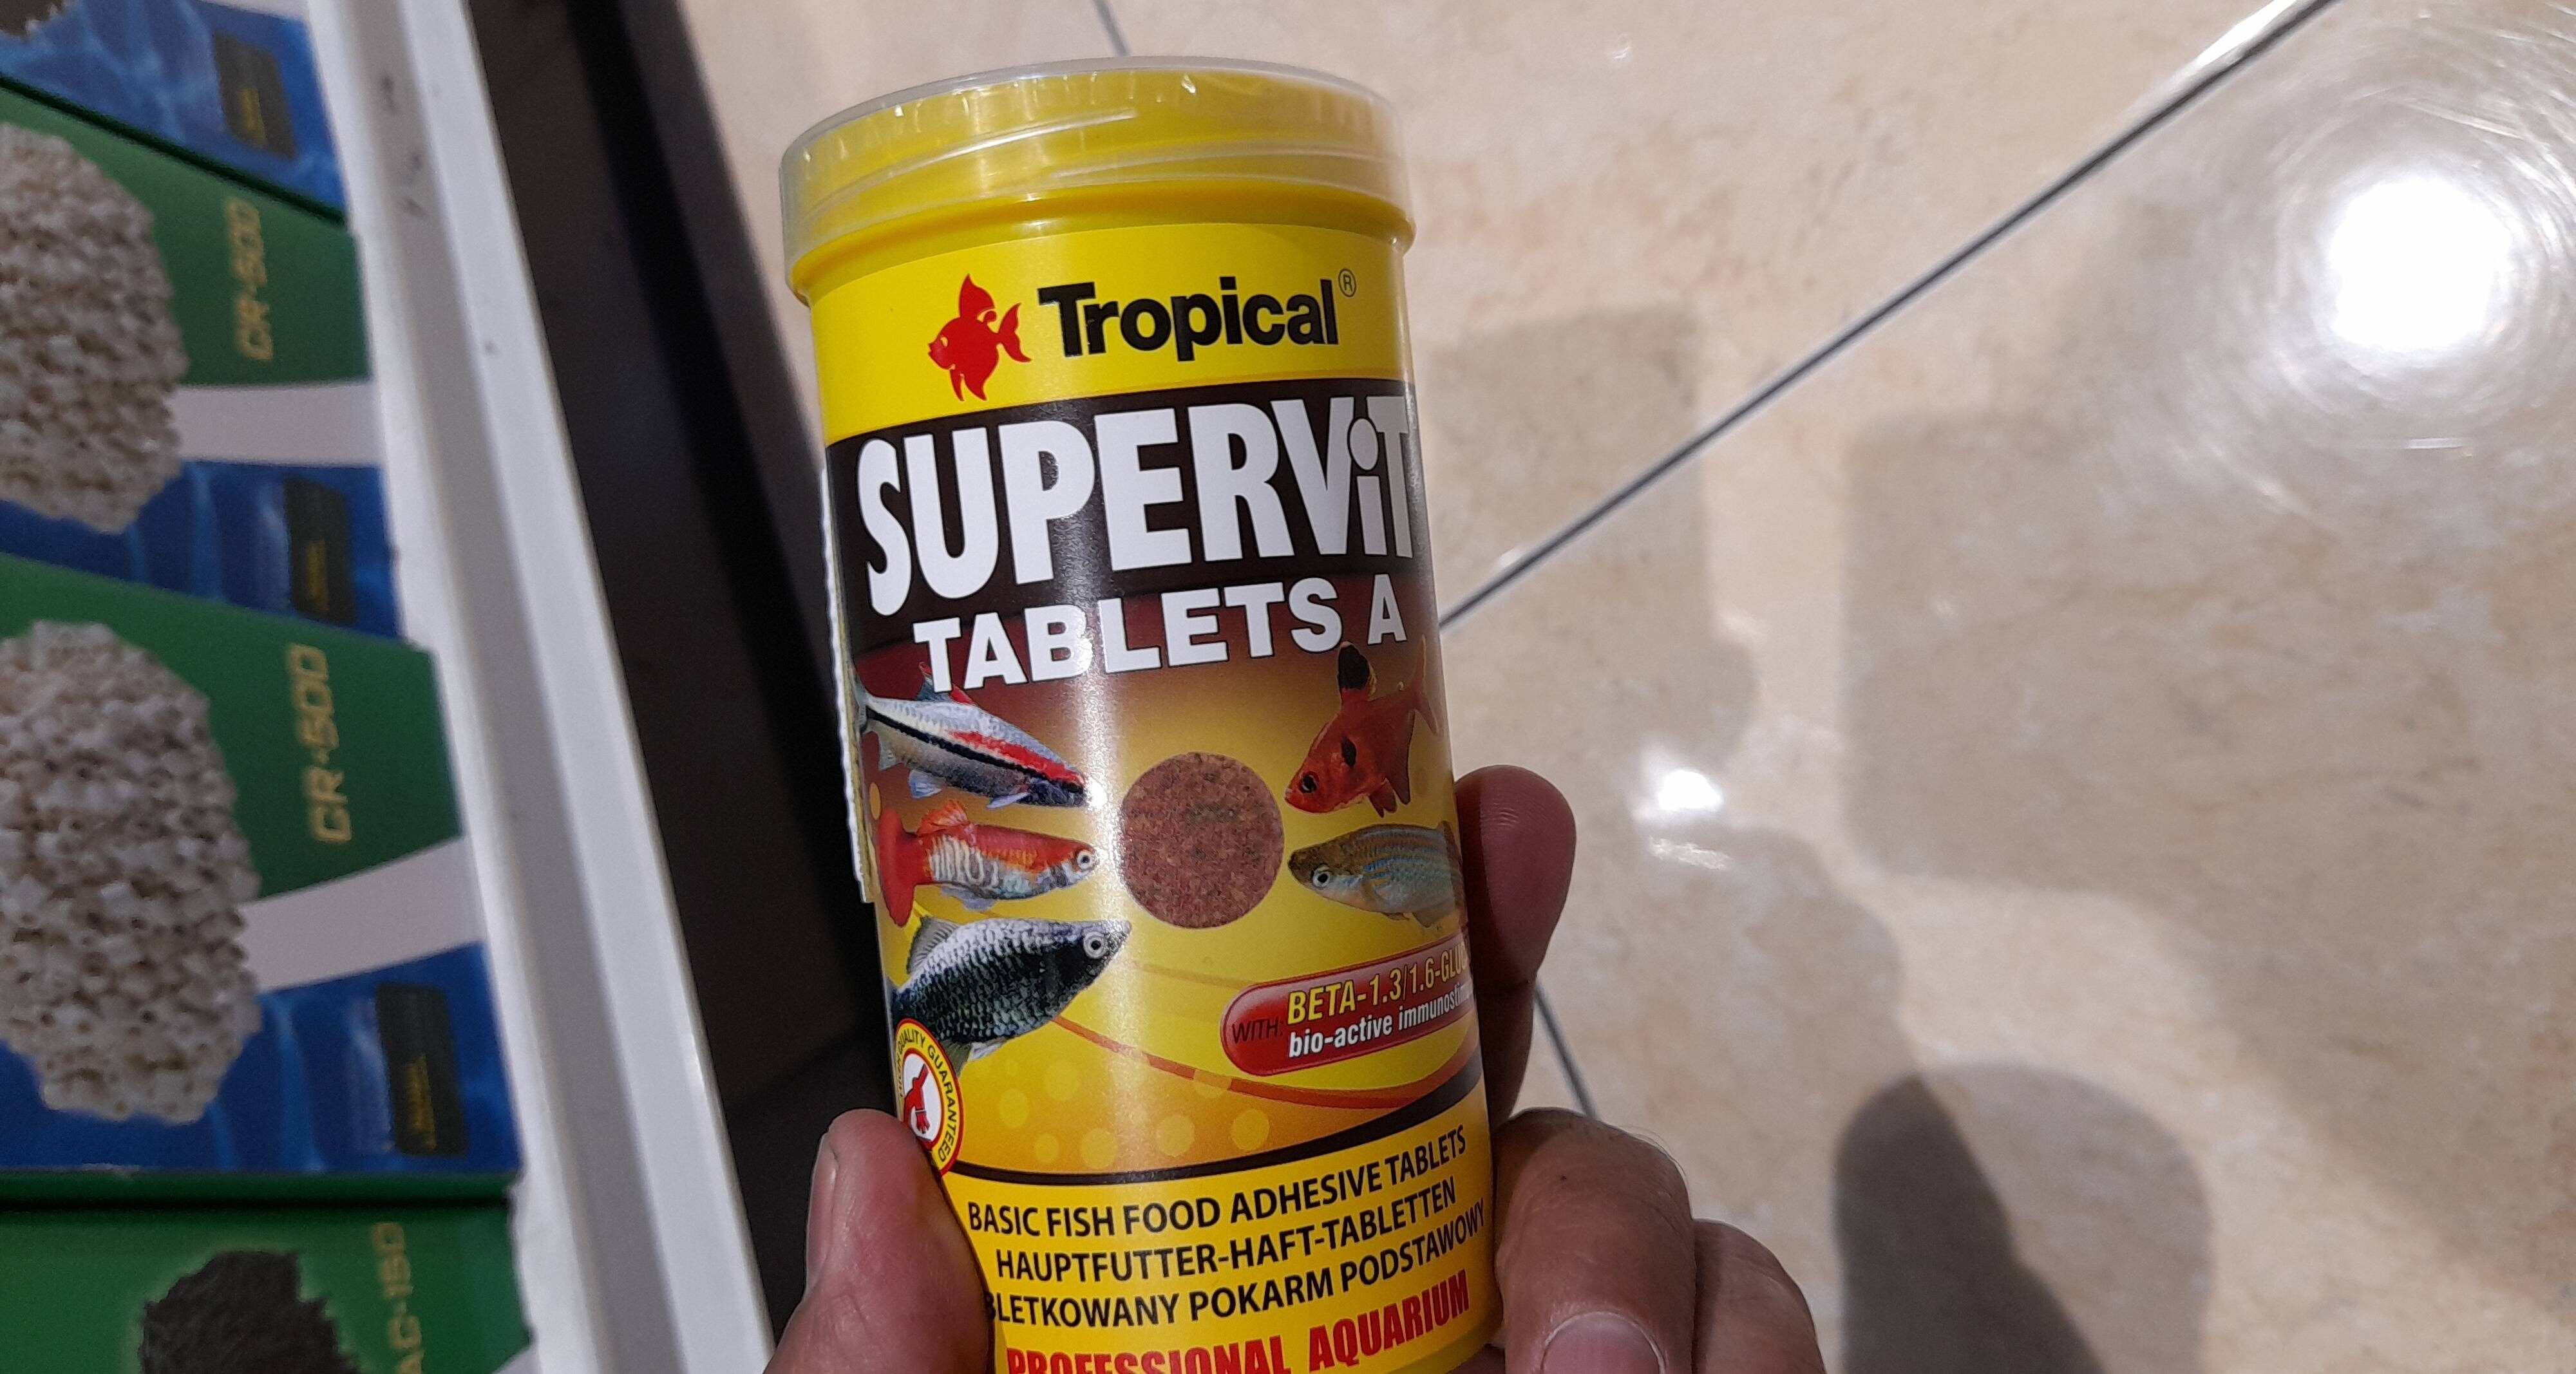 Tropical supervit tablets A 250ml - Product - en